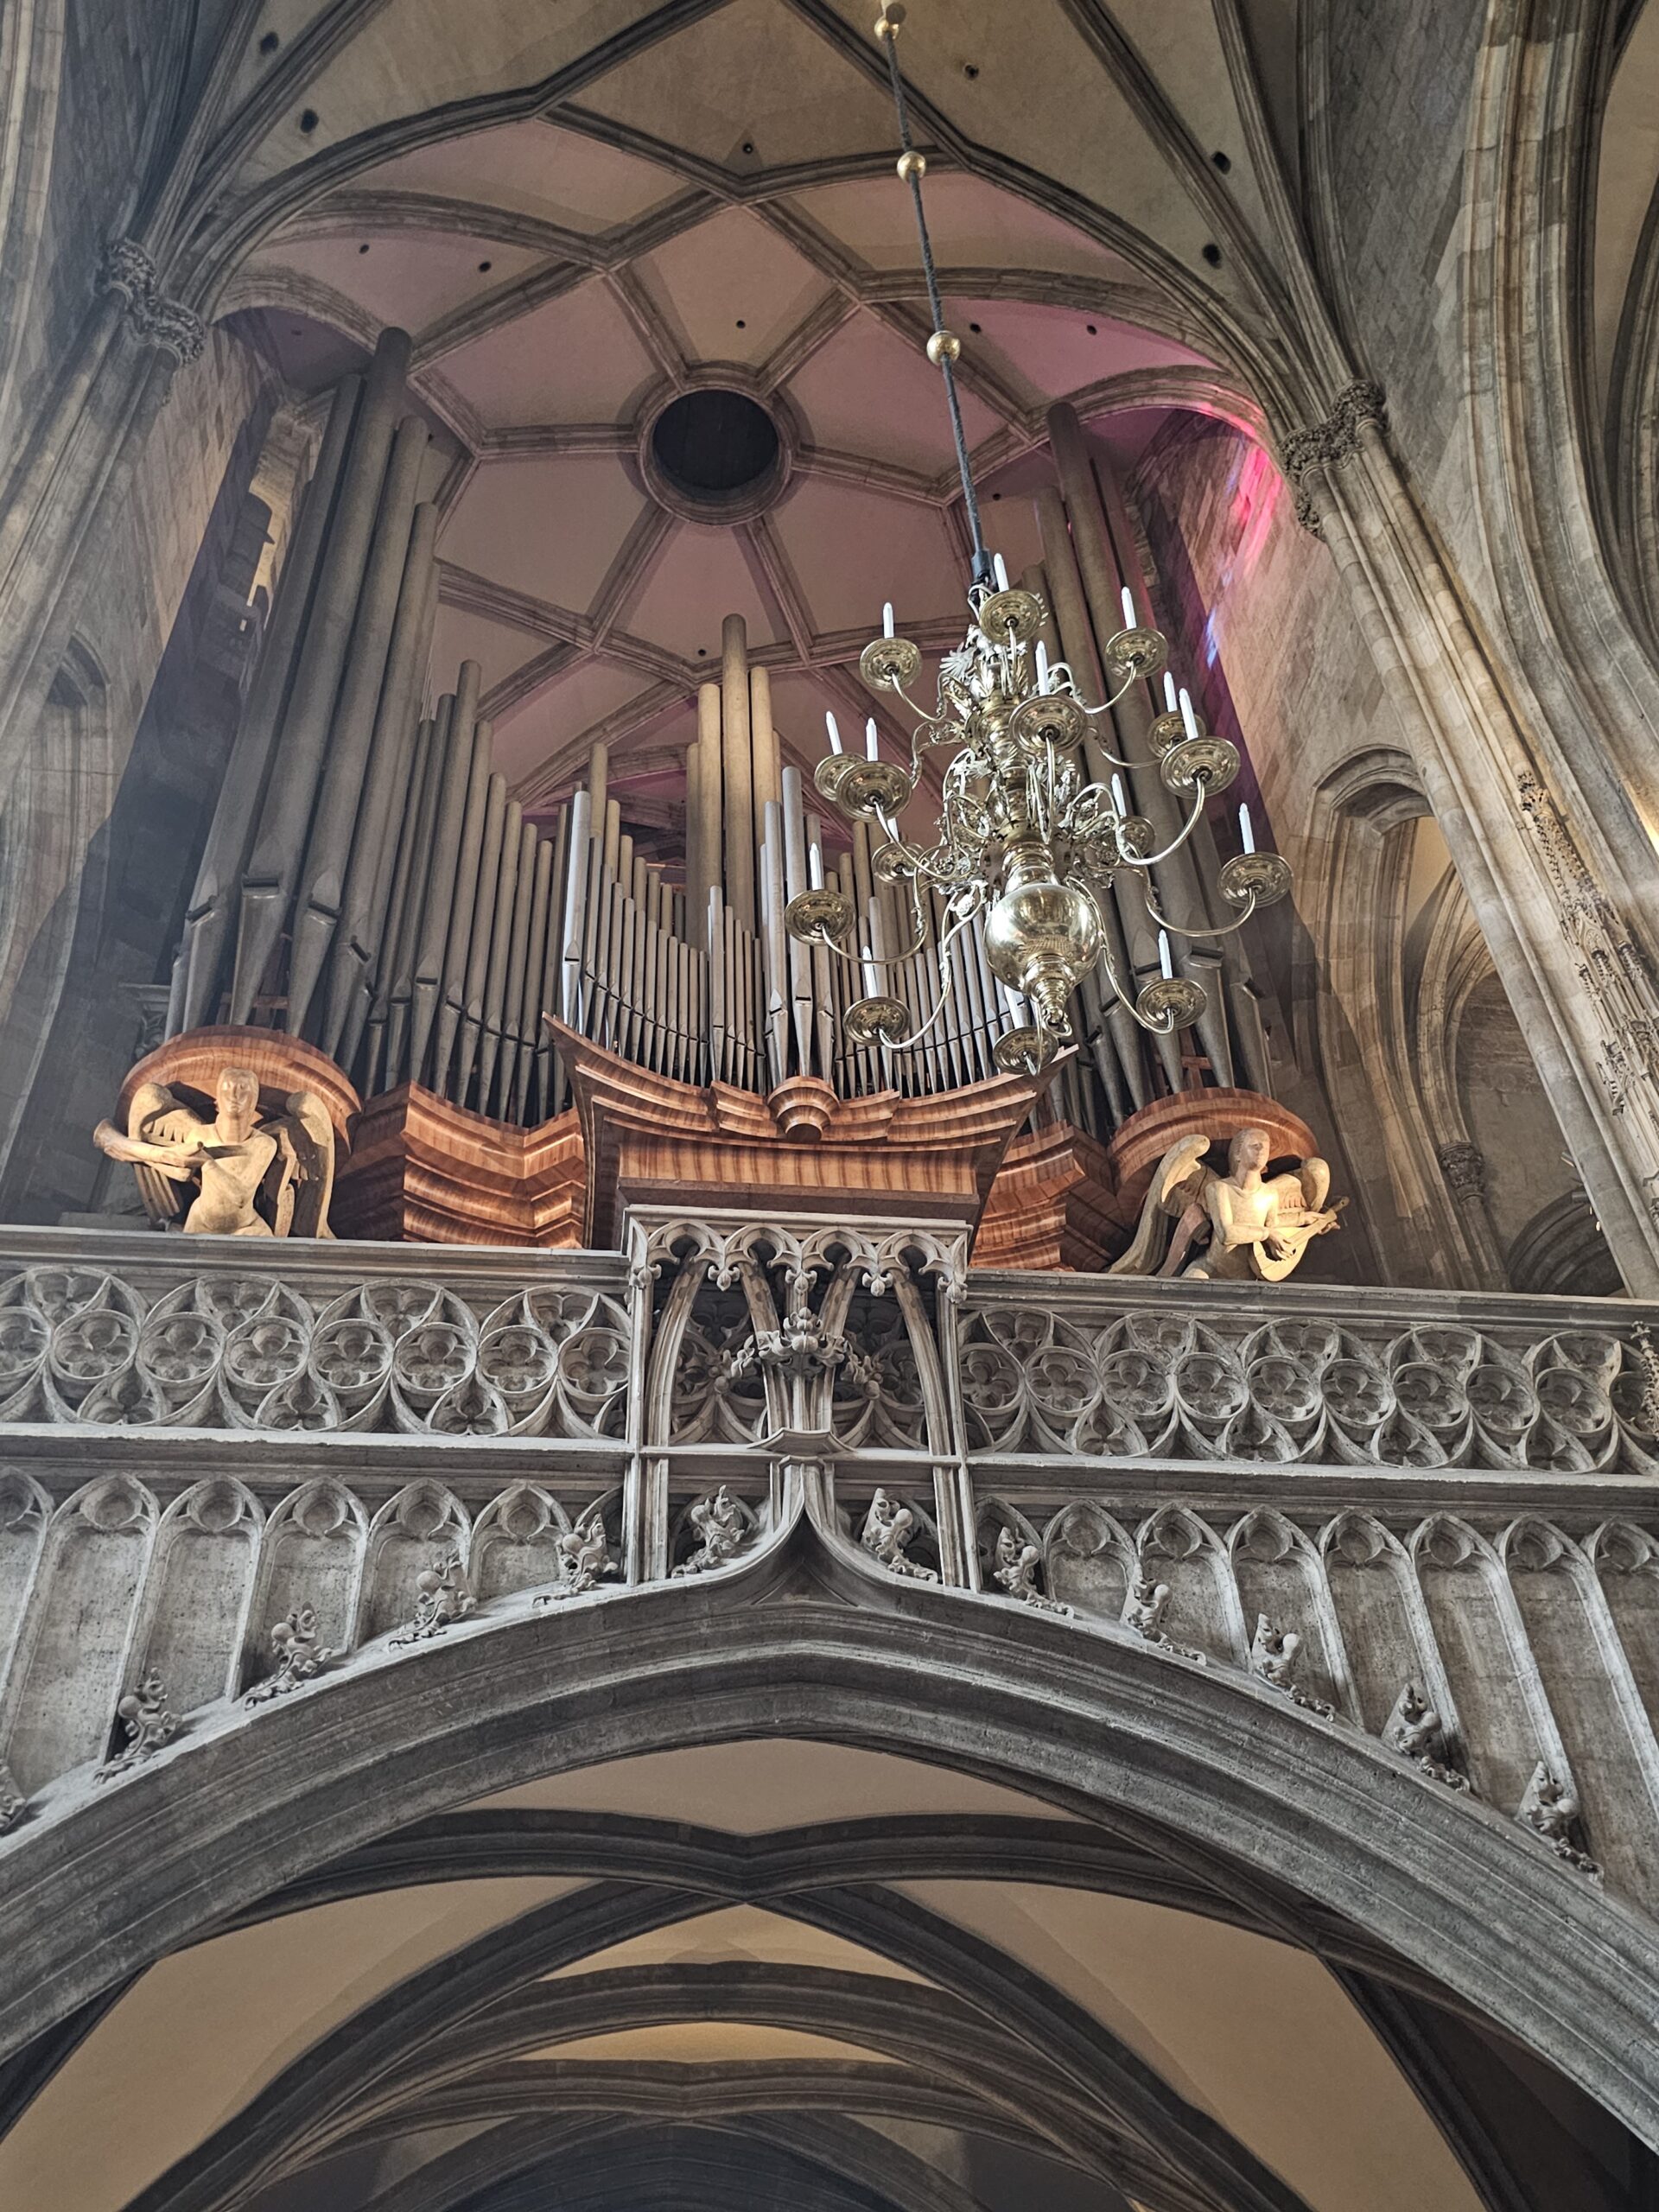 Organ at St Stephen's Cathedral, Vienna.